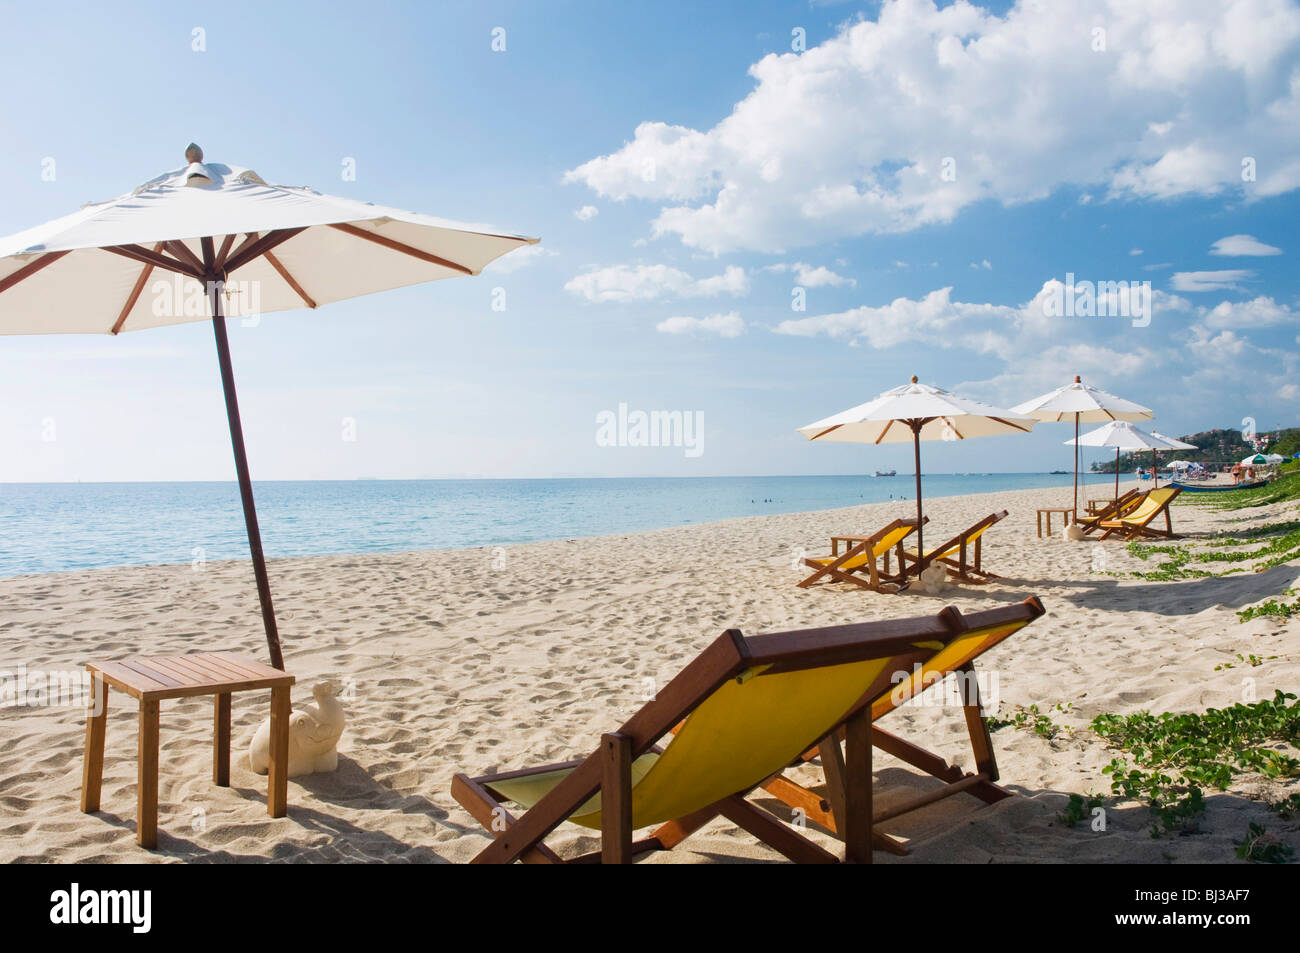 Parasols and sun loungers on the sandy beach, Klong Nin Beach, Ko Lanta or Koh Lanta island, Krabi, Thailand, Asia Stock Photo